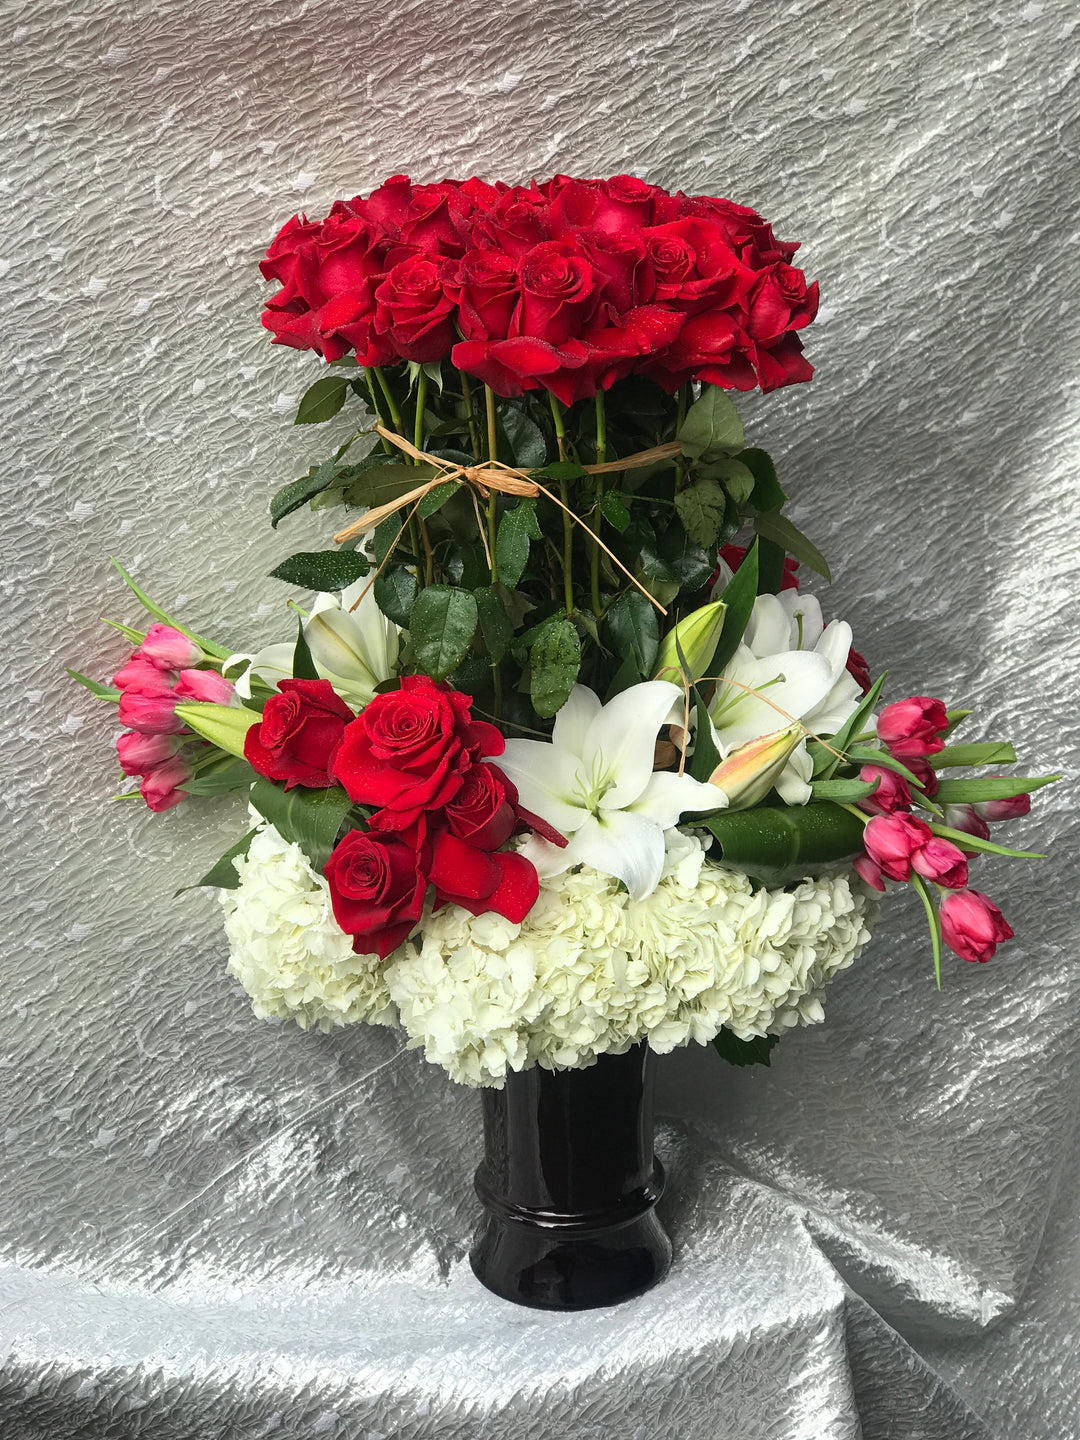 Tall Rose Arrangement In A Vase